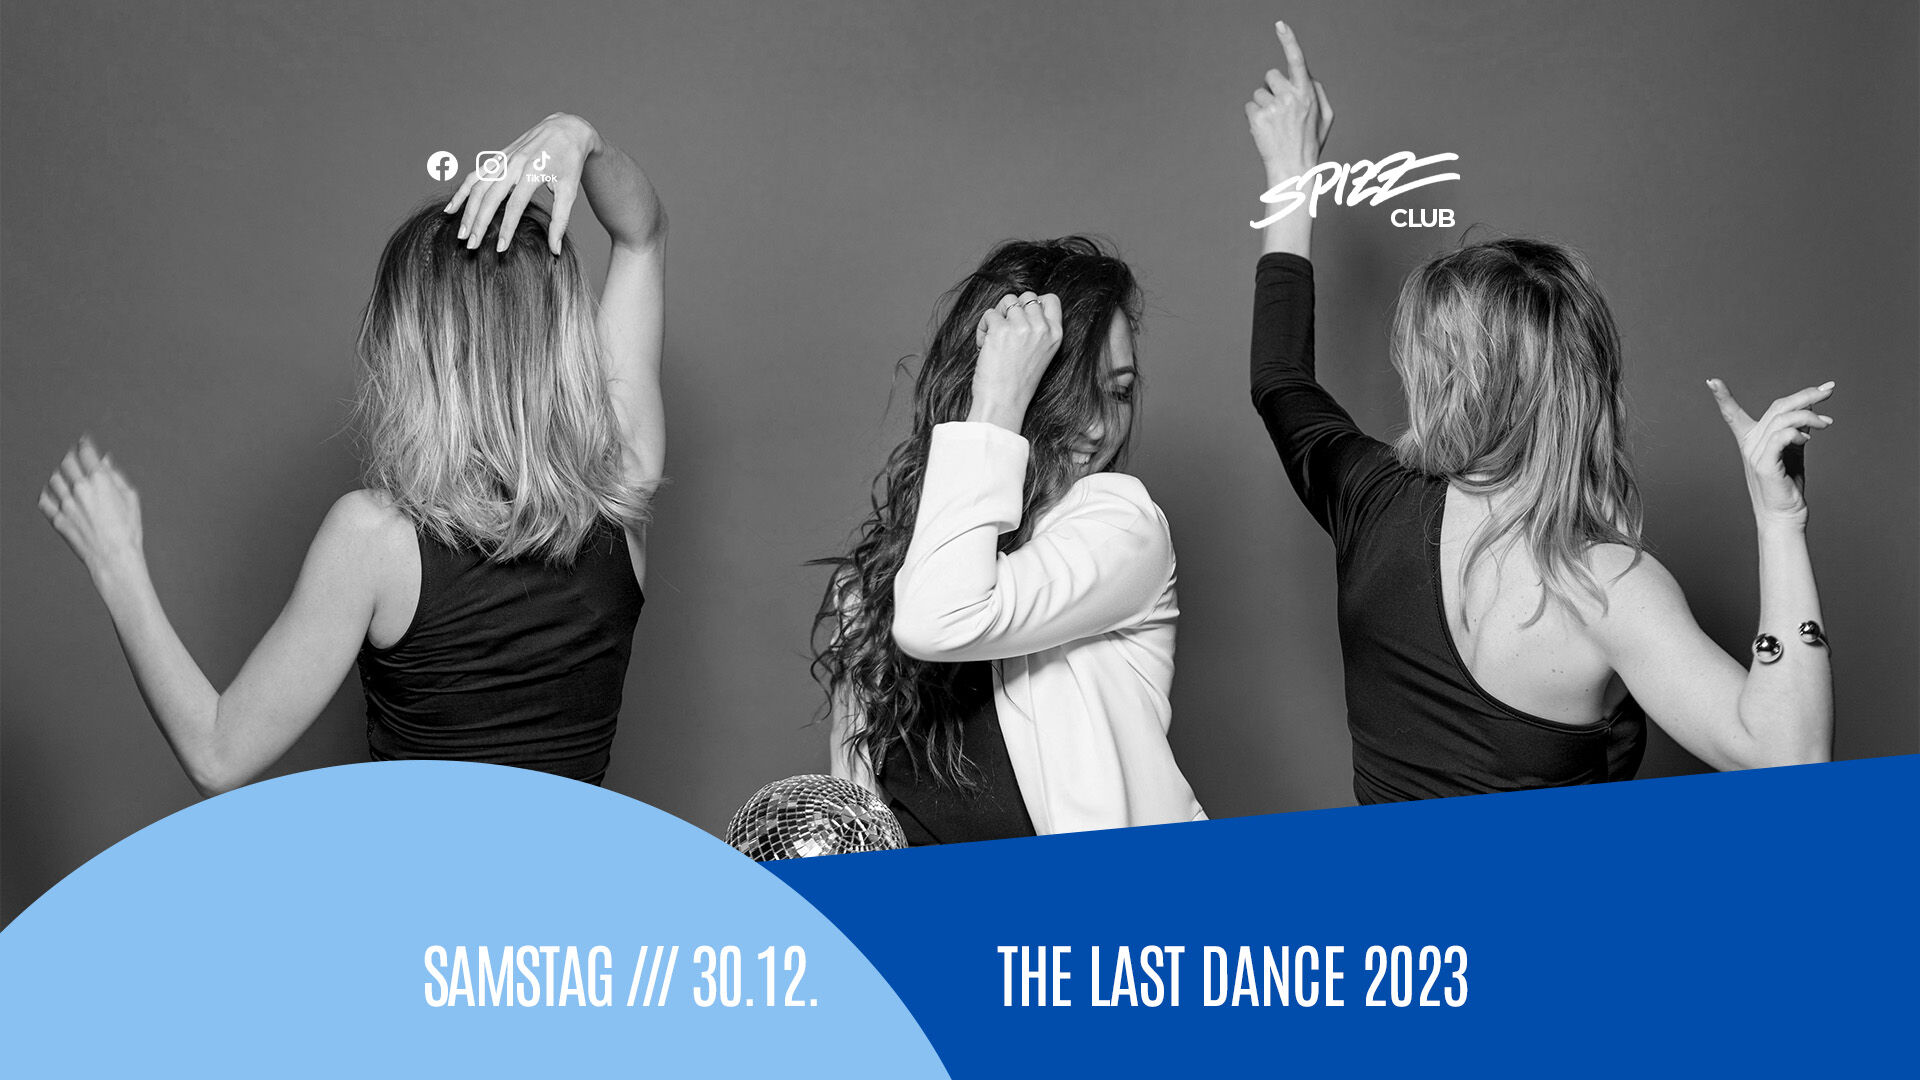 THE LAST DANCE 2023 